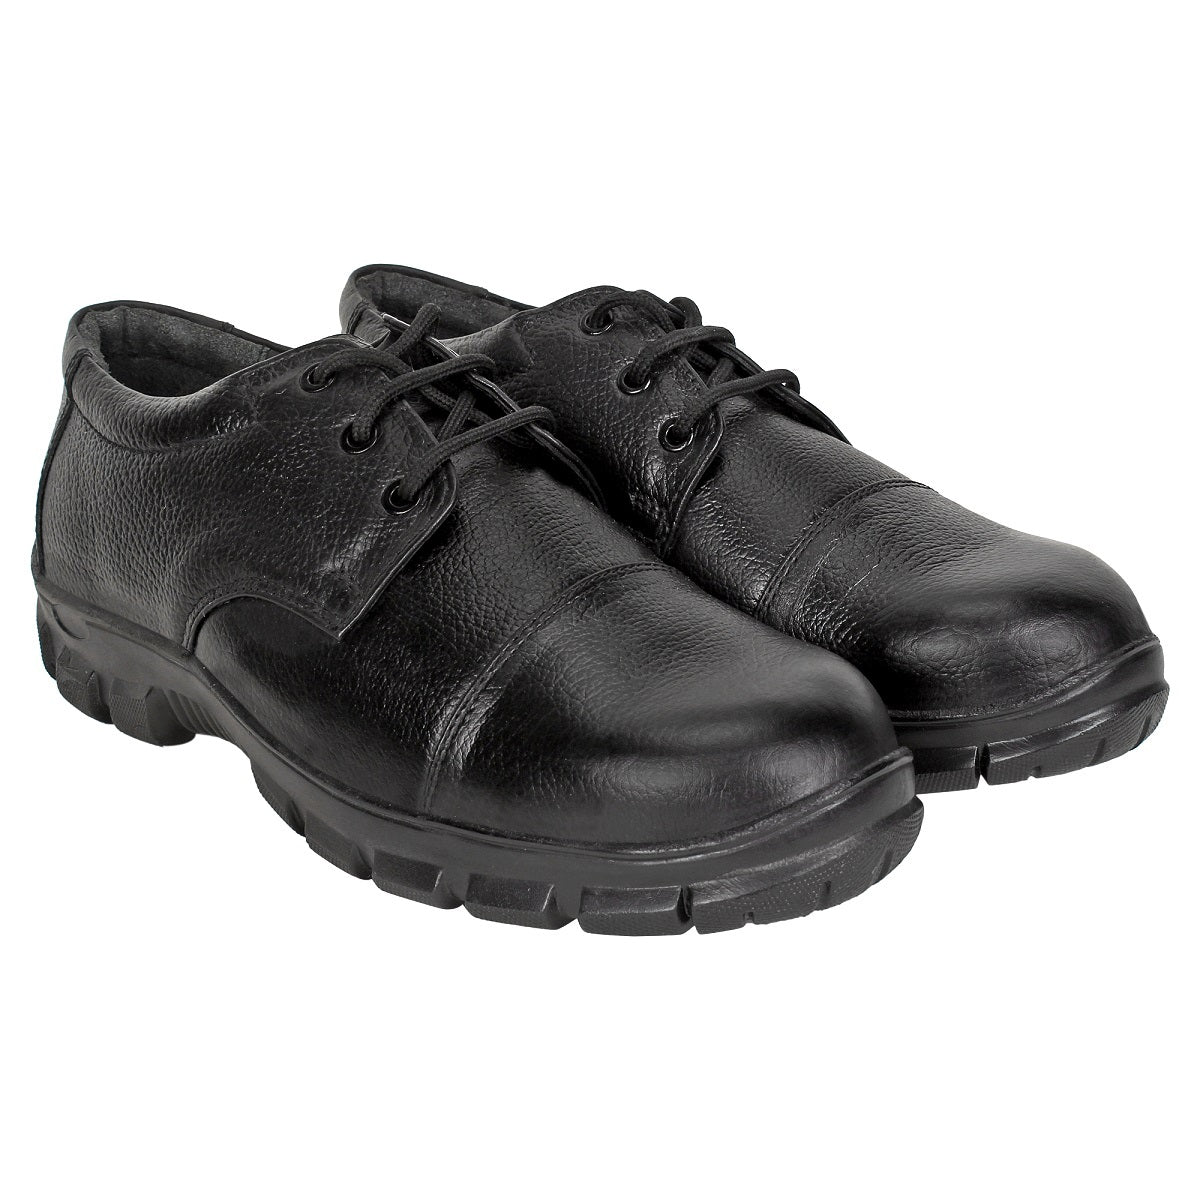 Buy Karam Industrial Safety Shoes Online